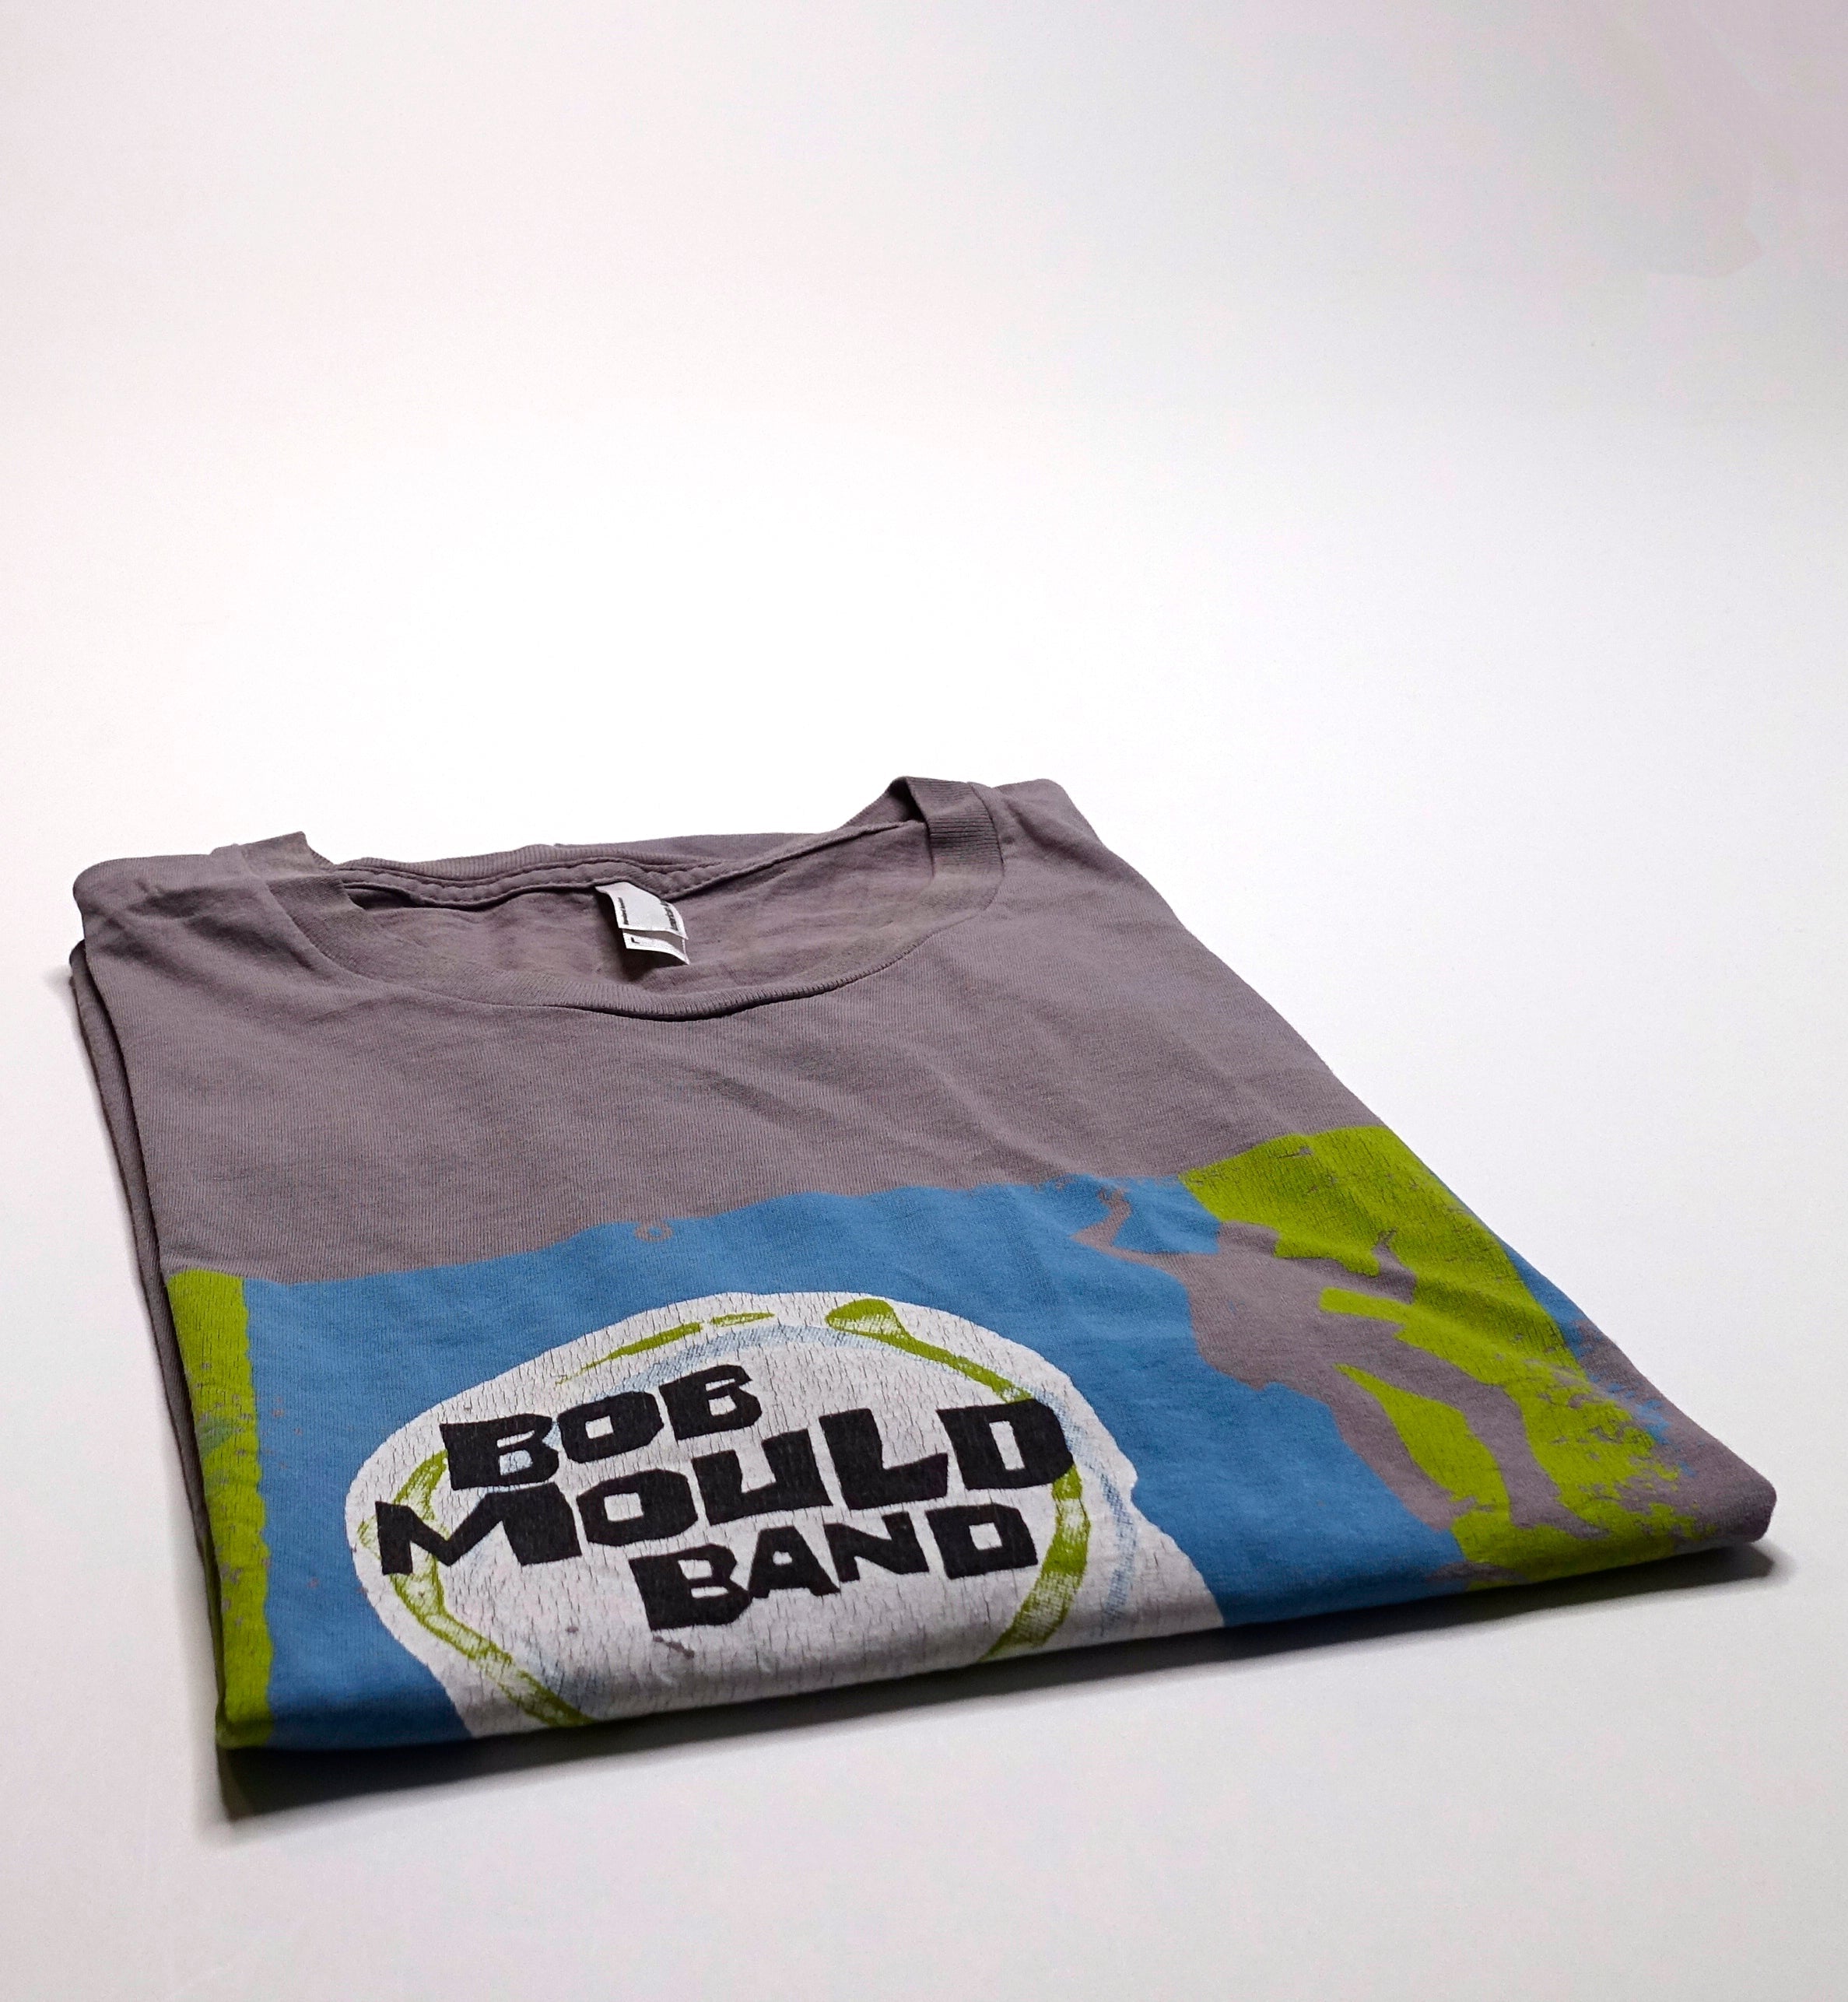 Bob Mould - Life And Times 2009 Tour Shirt Size Large